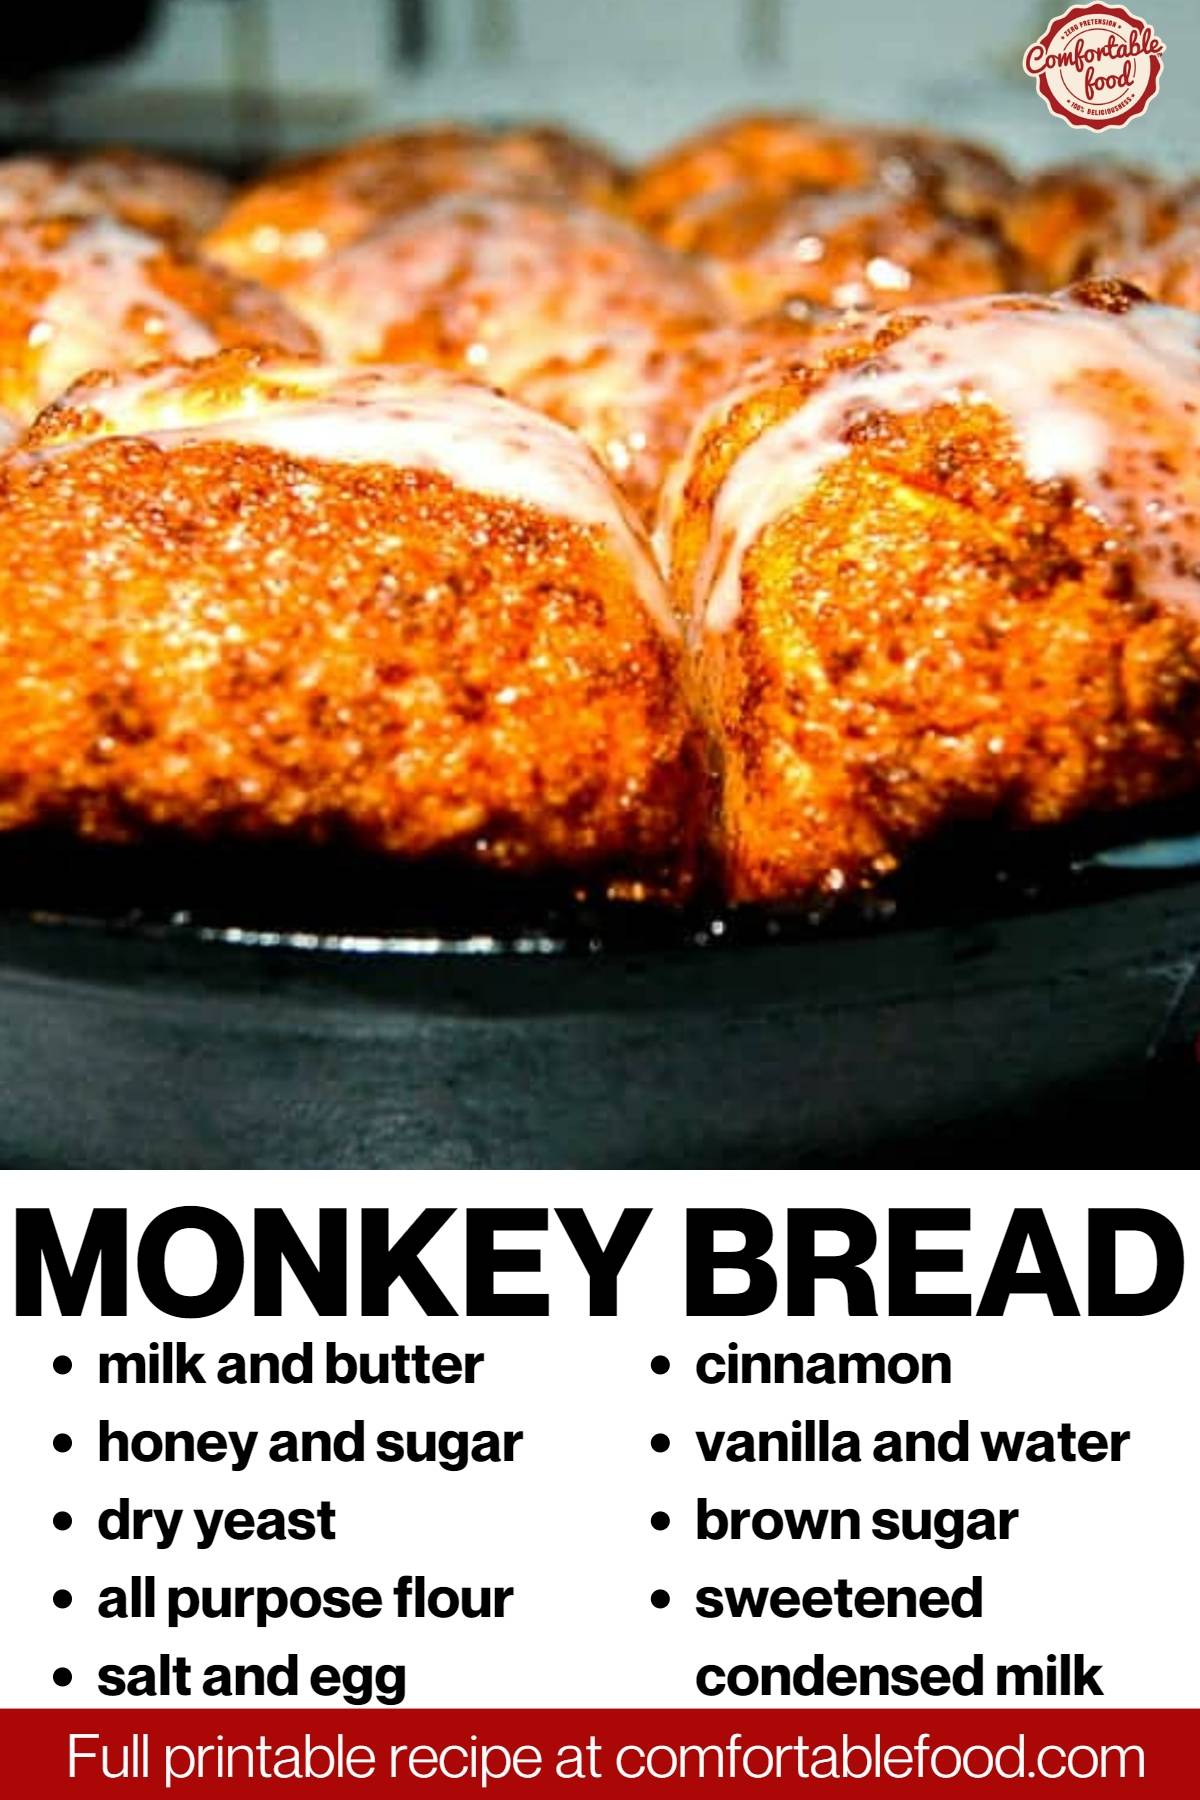 Monkey bread socials